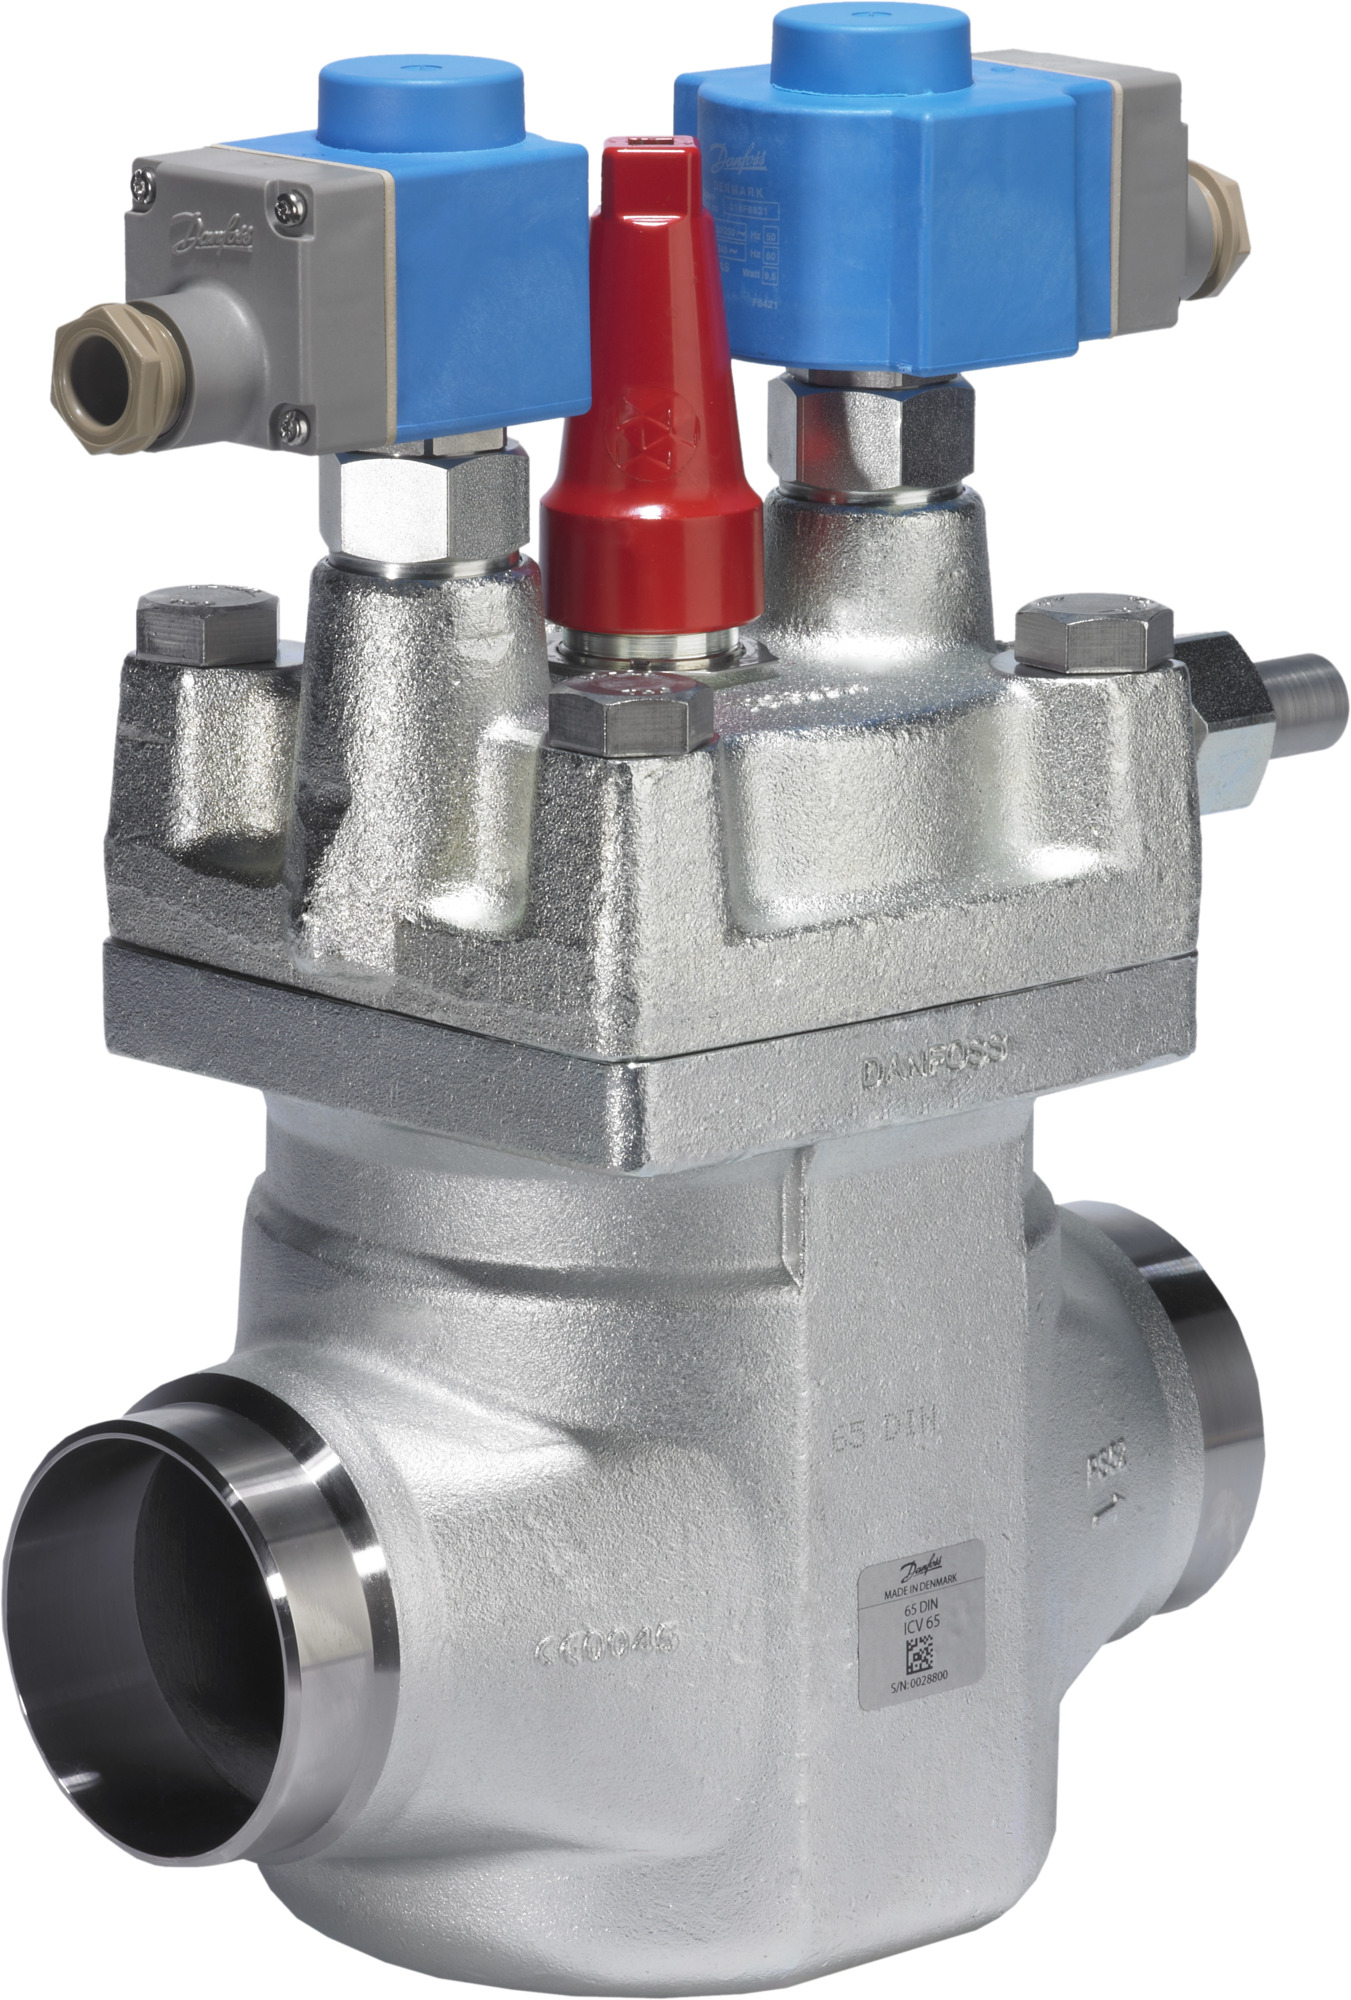 2-step solenoid valve, ICLX 80, 80.0 mm, Butt weld